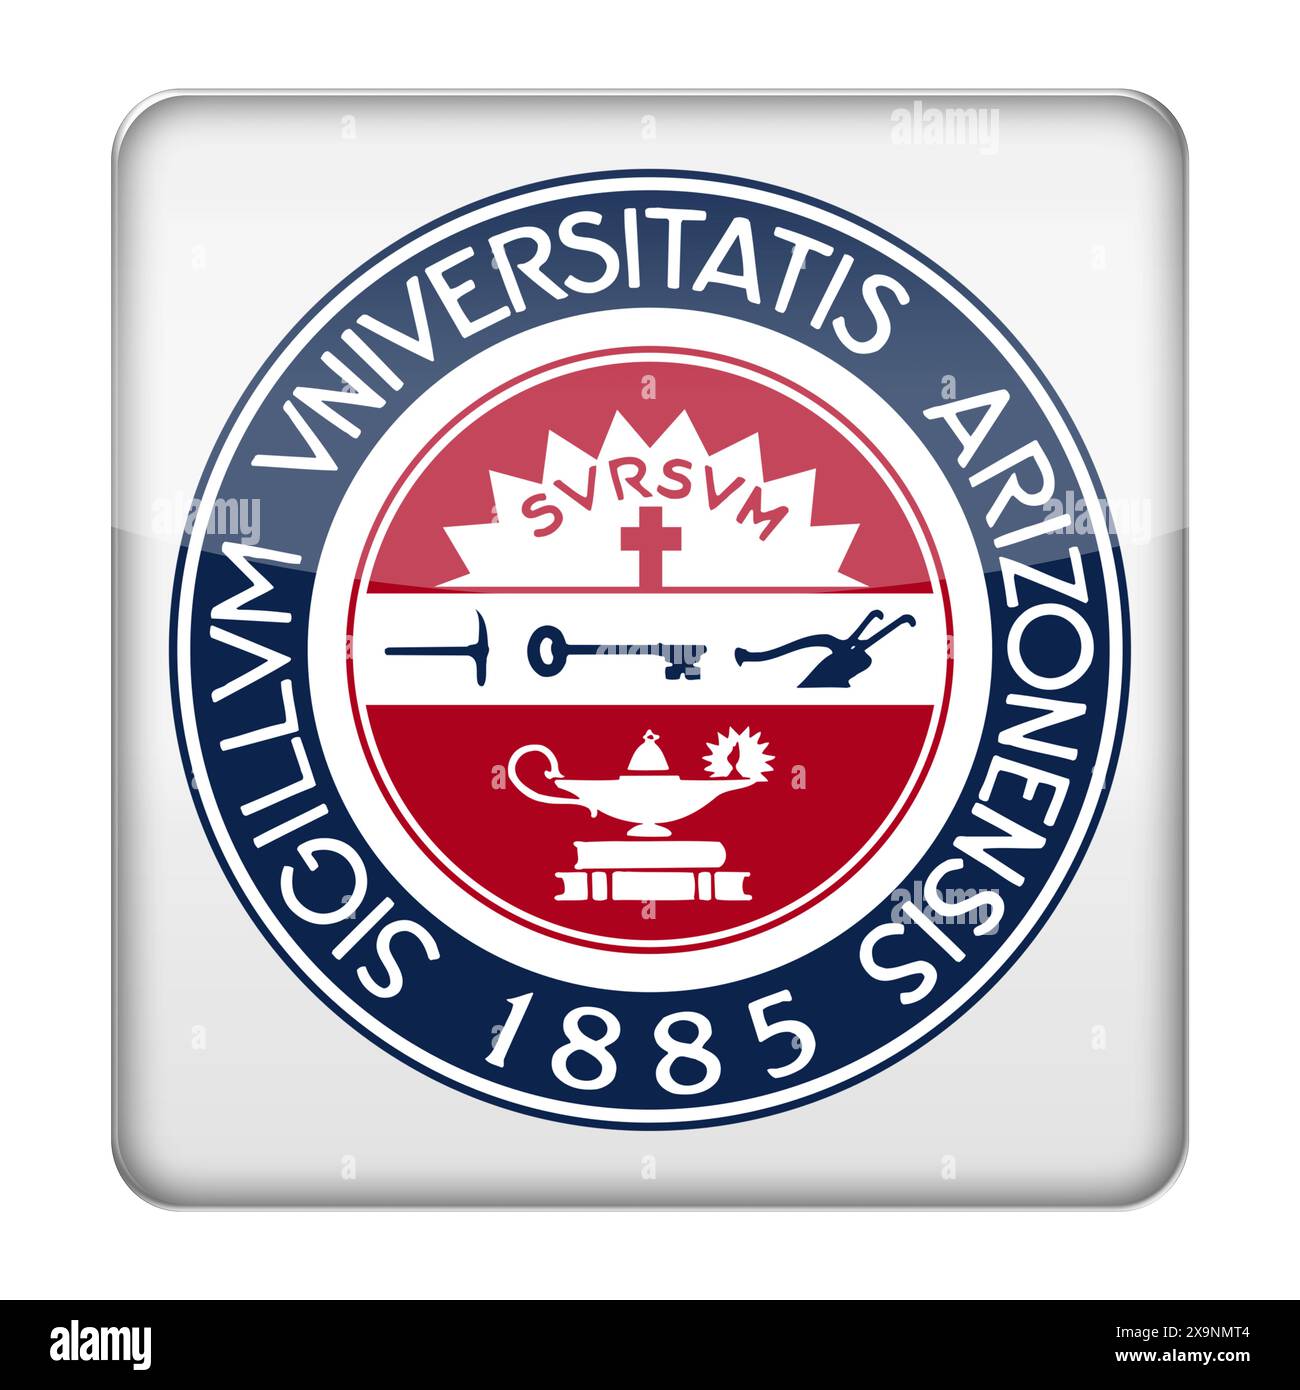 University of Arizona logo button Stock Photo